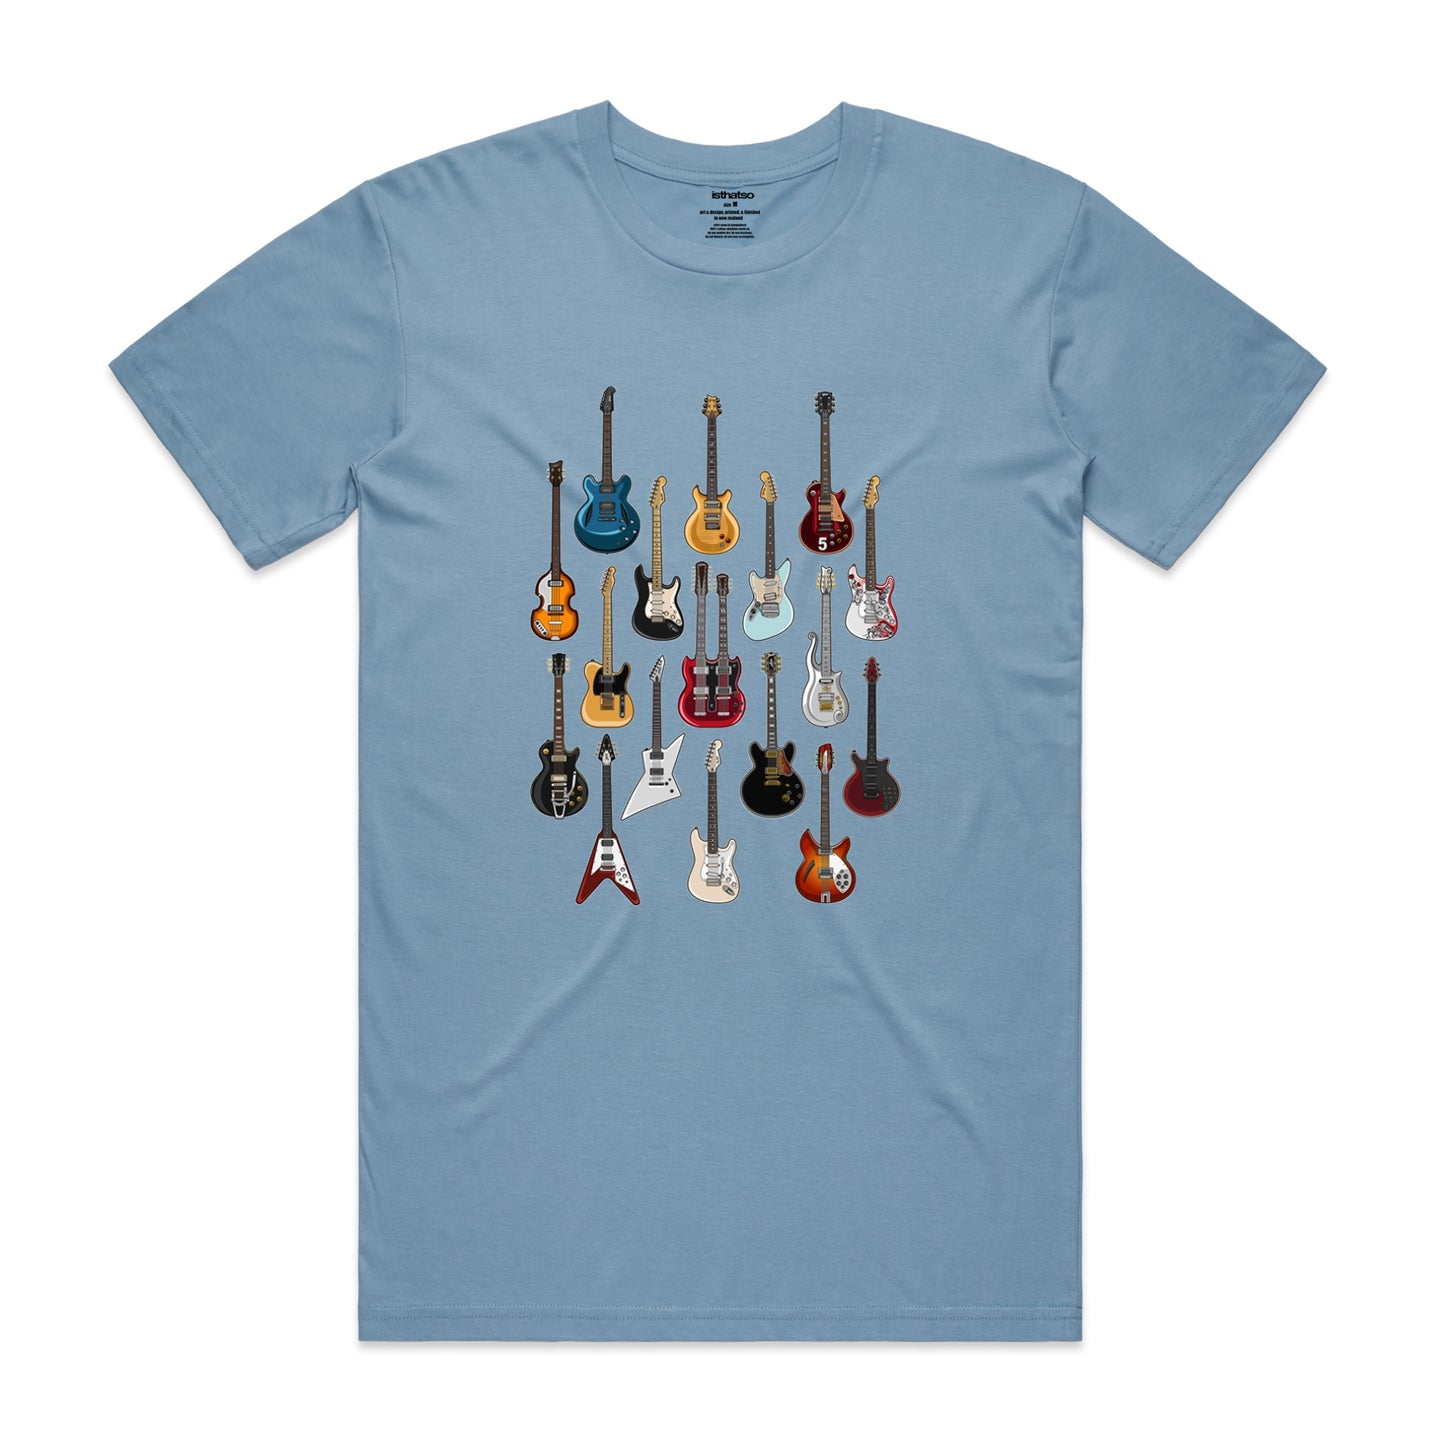 Isthatso Cotton Graphic T Shirt - Famous Guitars - Blue